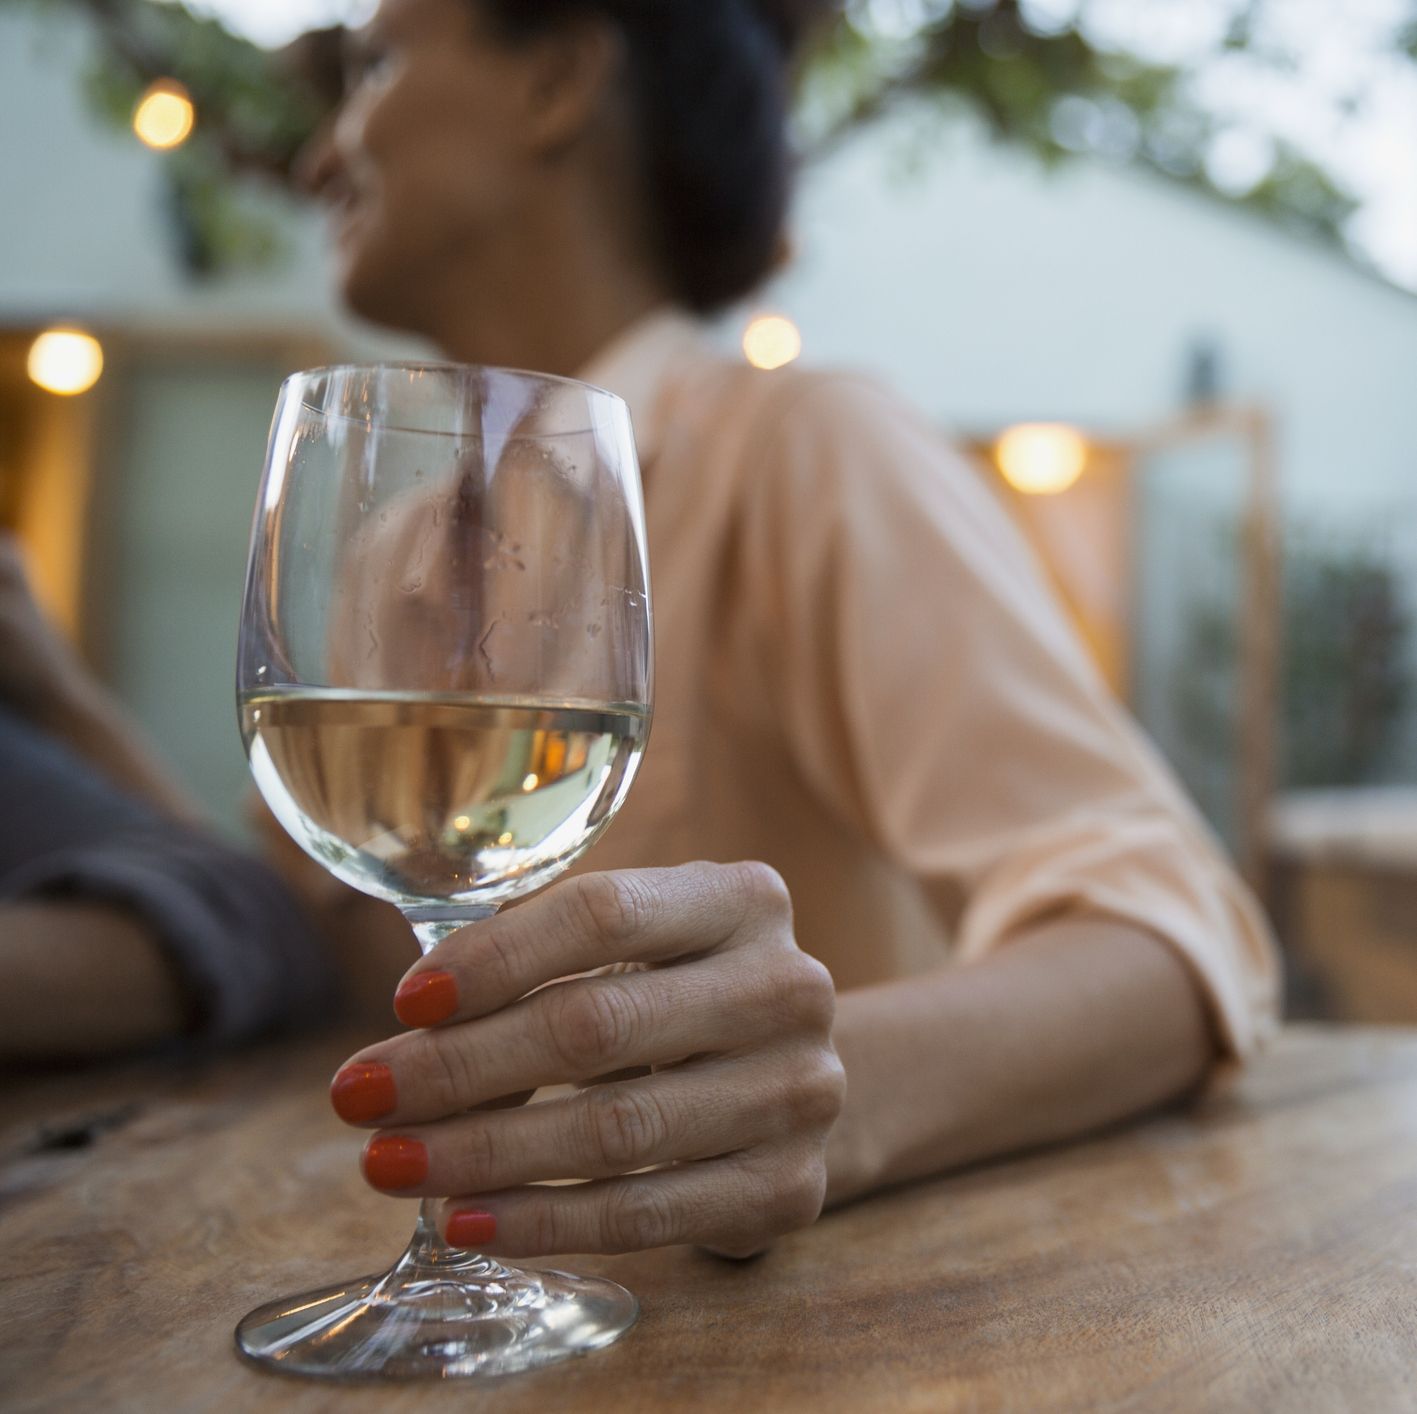 Woman drinking white wine on patio